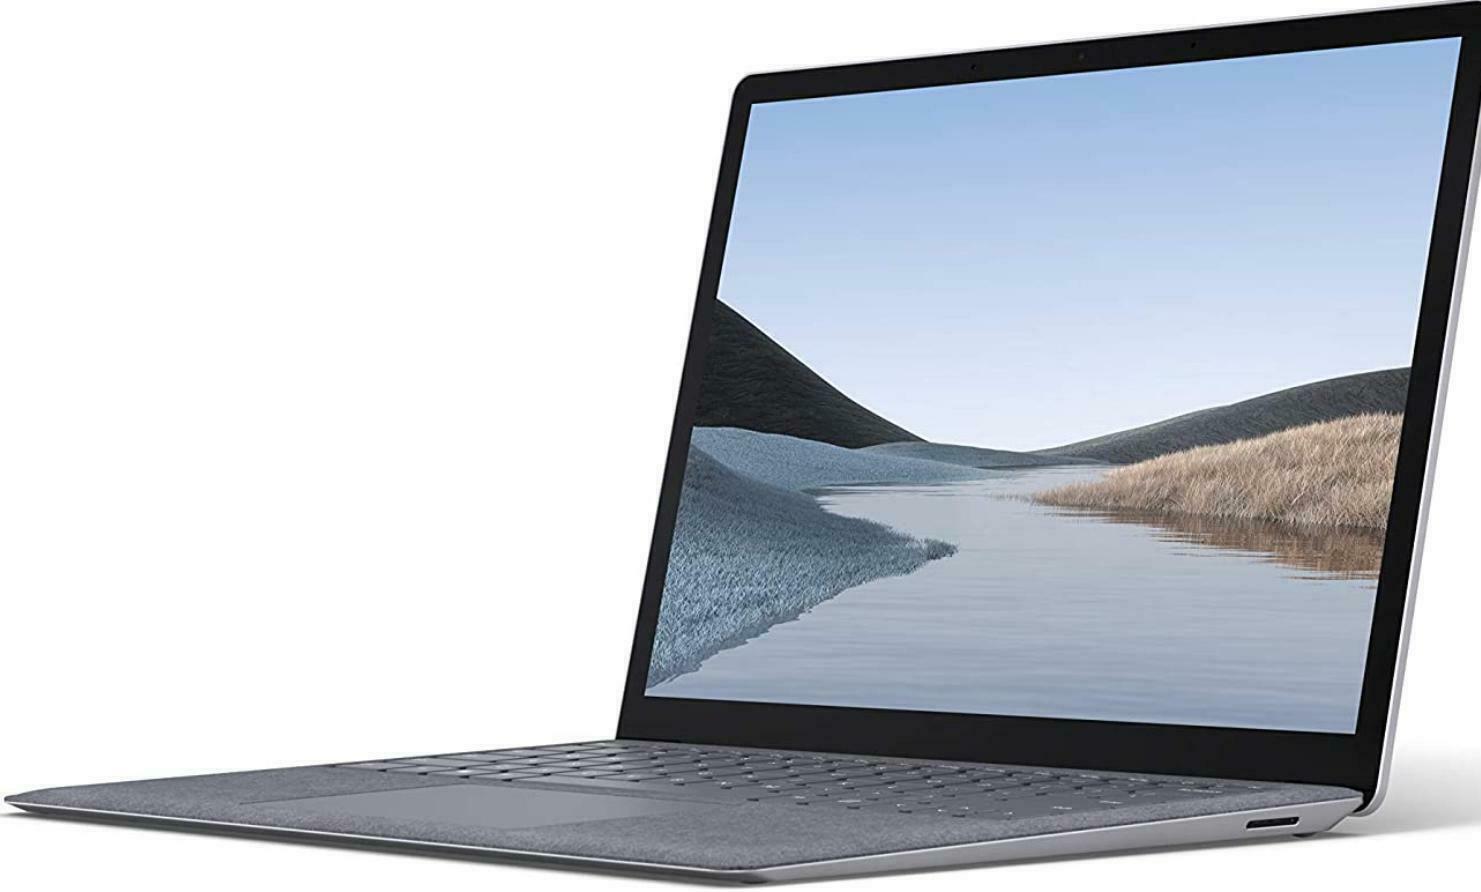 Microsoft Surface Laptop 1769 Touch-Screen Intel Core i7 8GB Model JKQ-00007